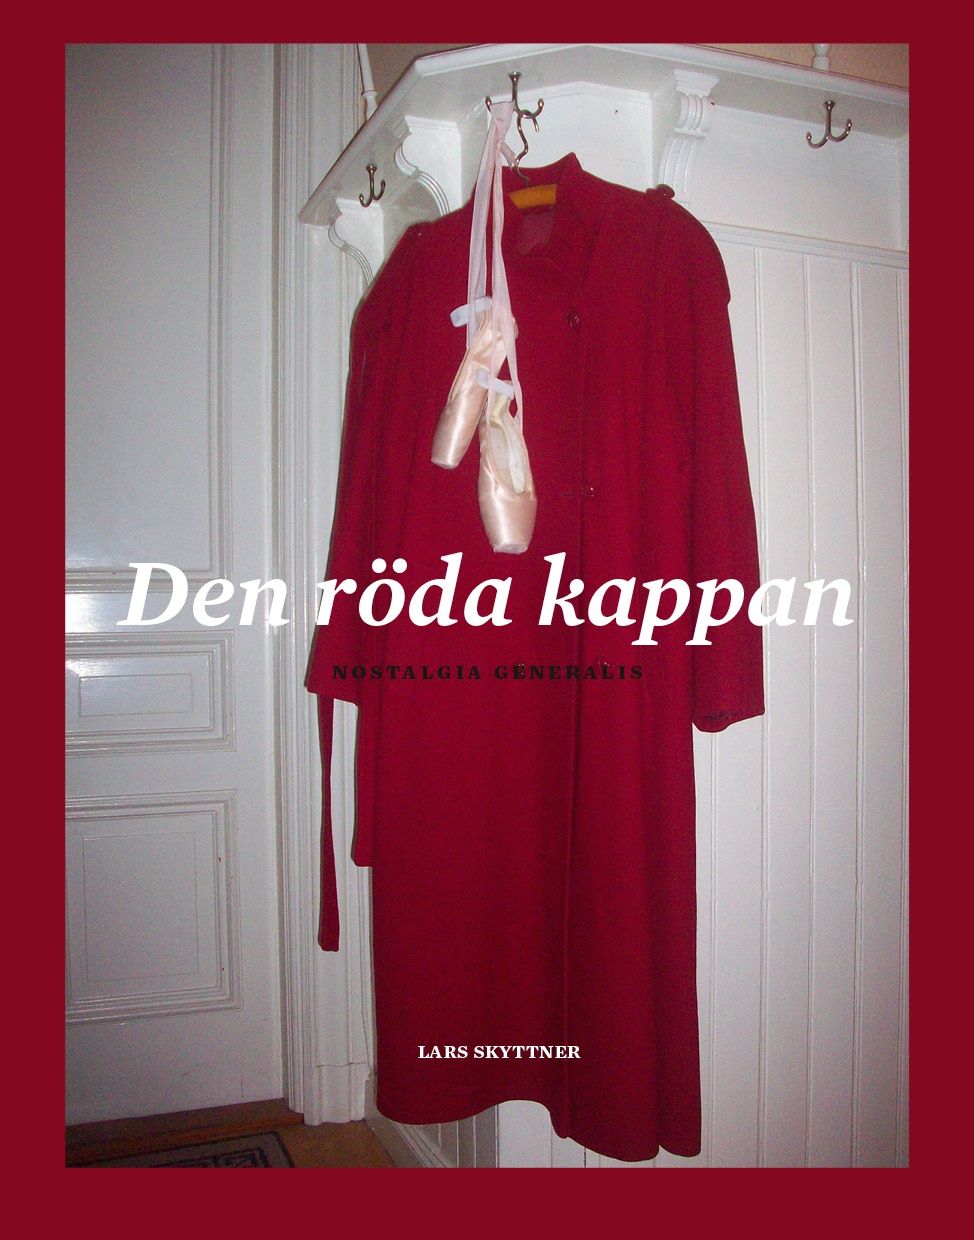 Den röda kappan, e-bog af Lars Skyttner